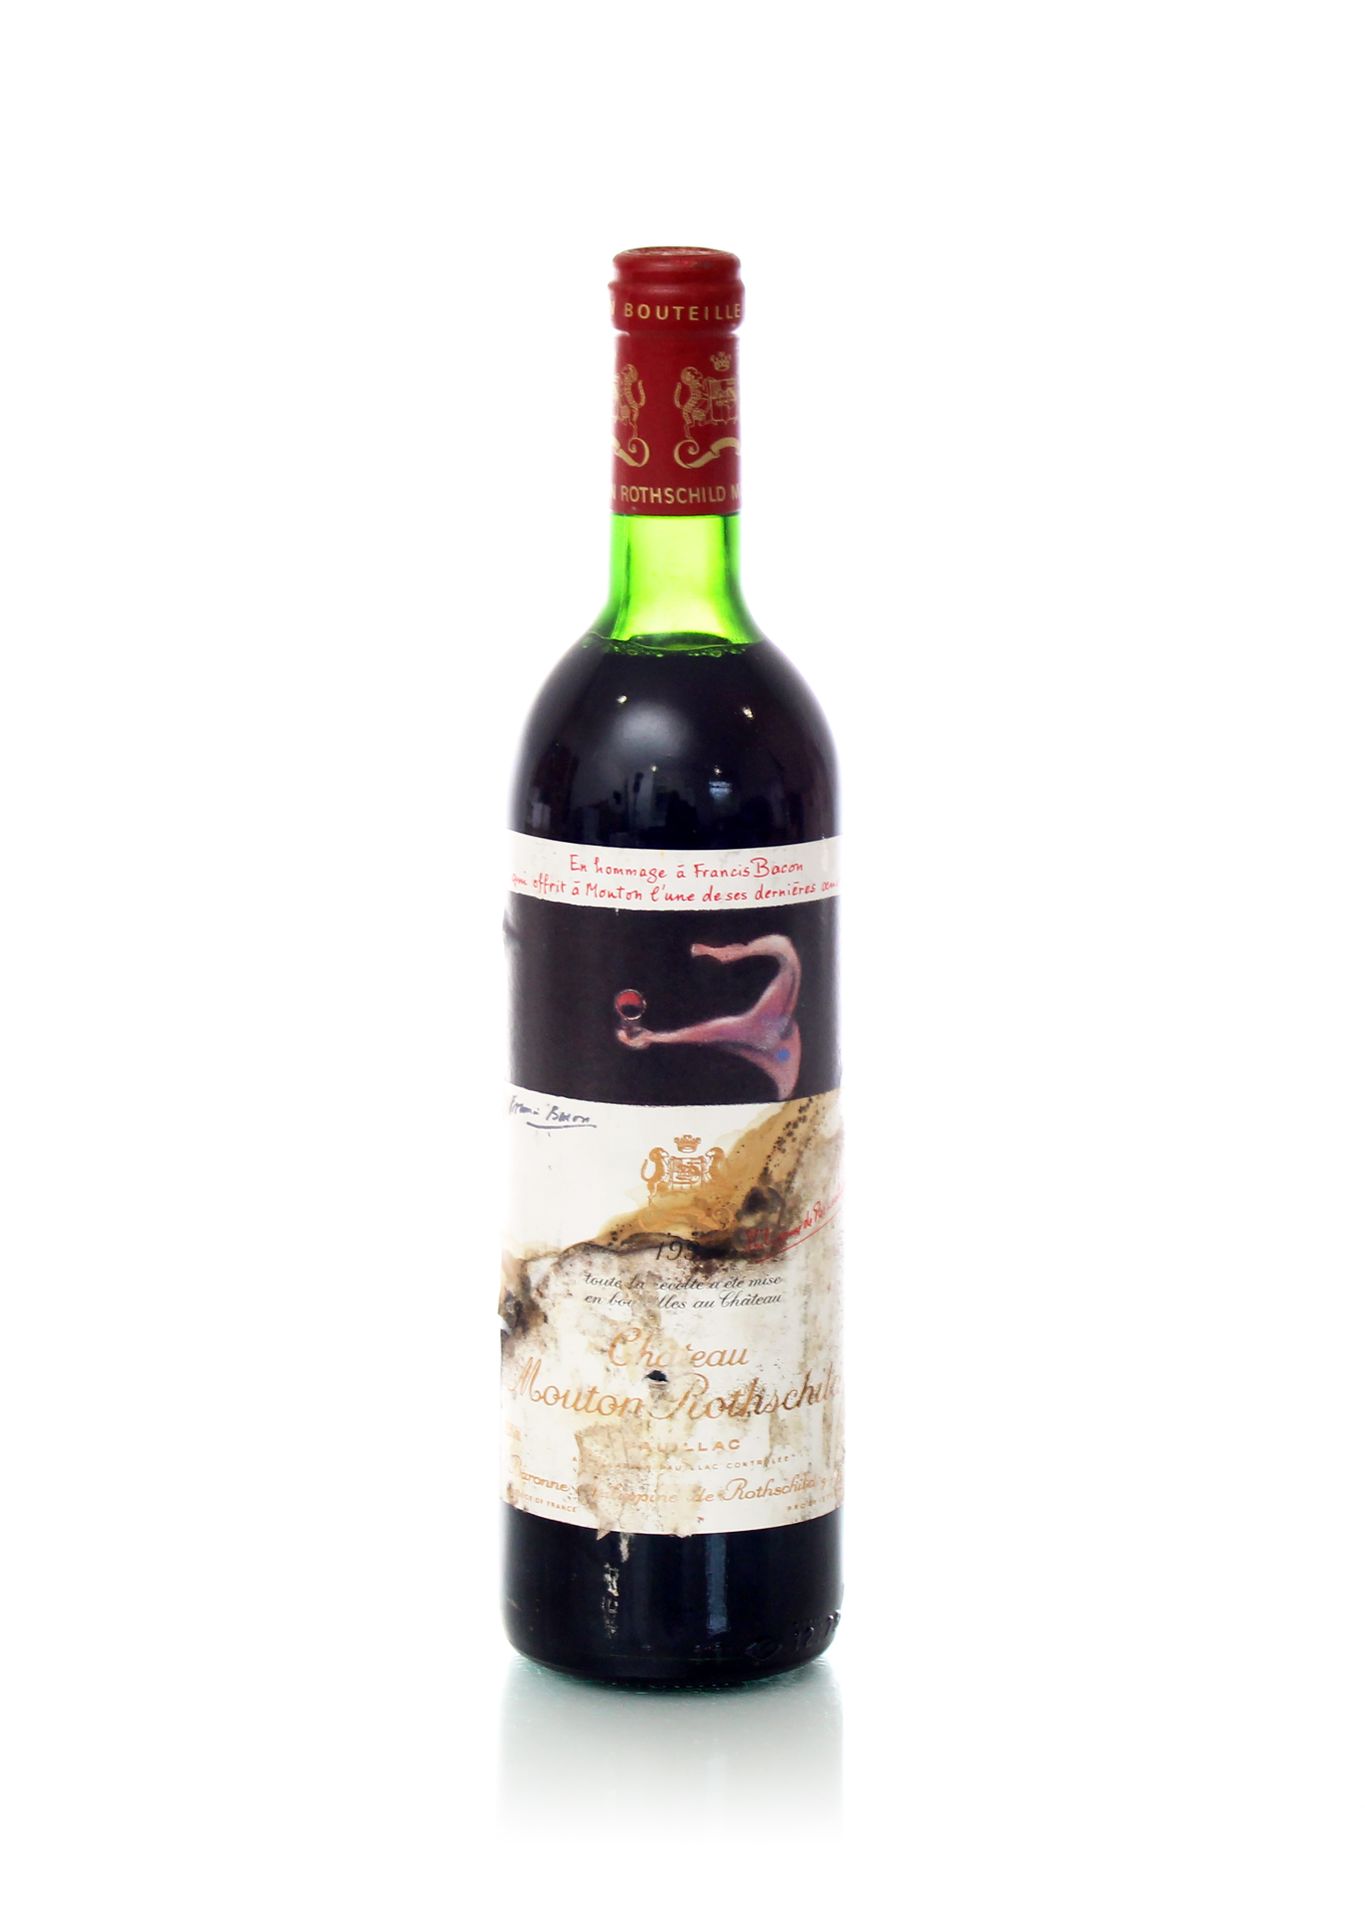 Null 1瓶慕顿-罗特希尔德红葡萄酒（CHÂTEAU MOUTON-ROTHSCHILD 
年份：1990
产区 : GCC1 PAUILLAC
备注 : H&hellip;